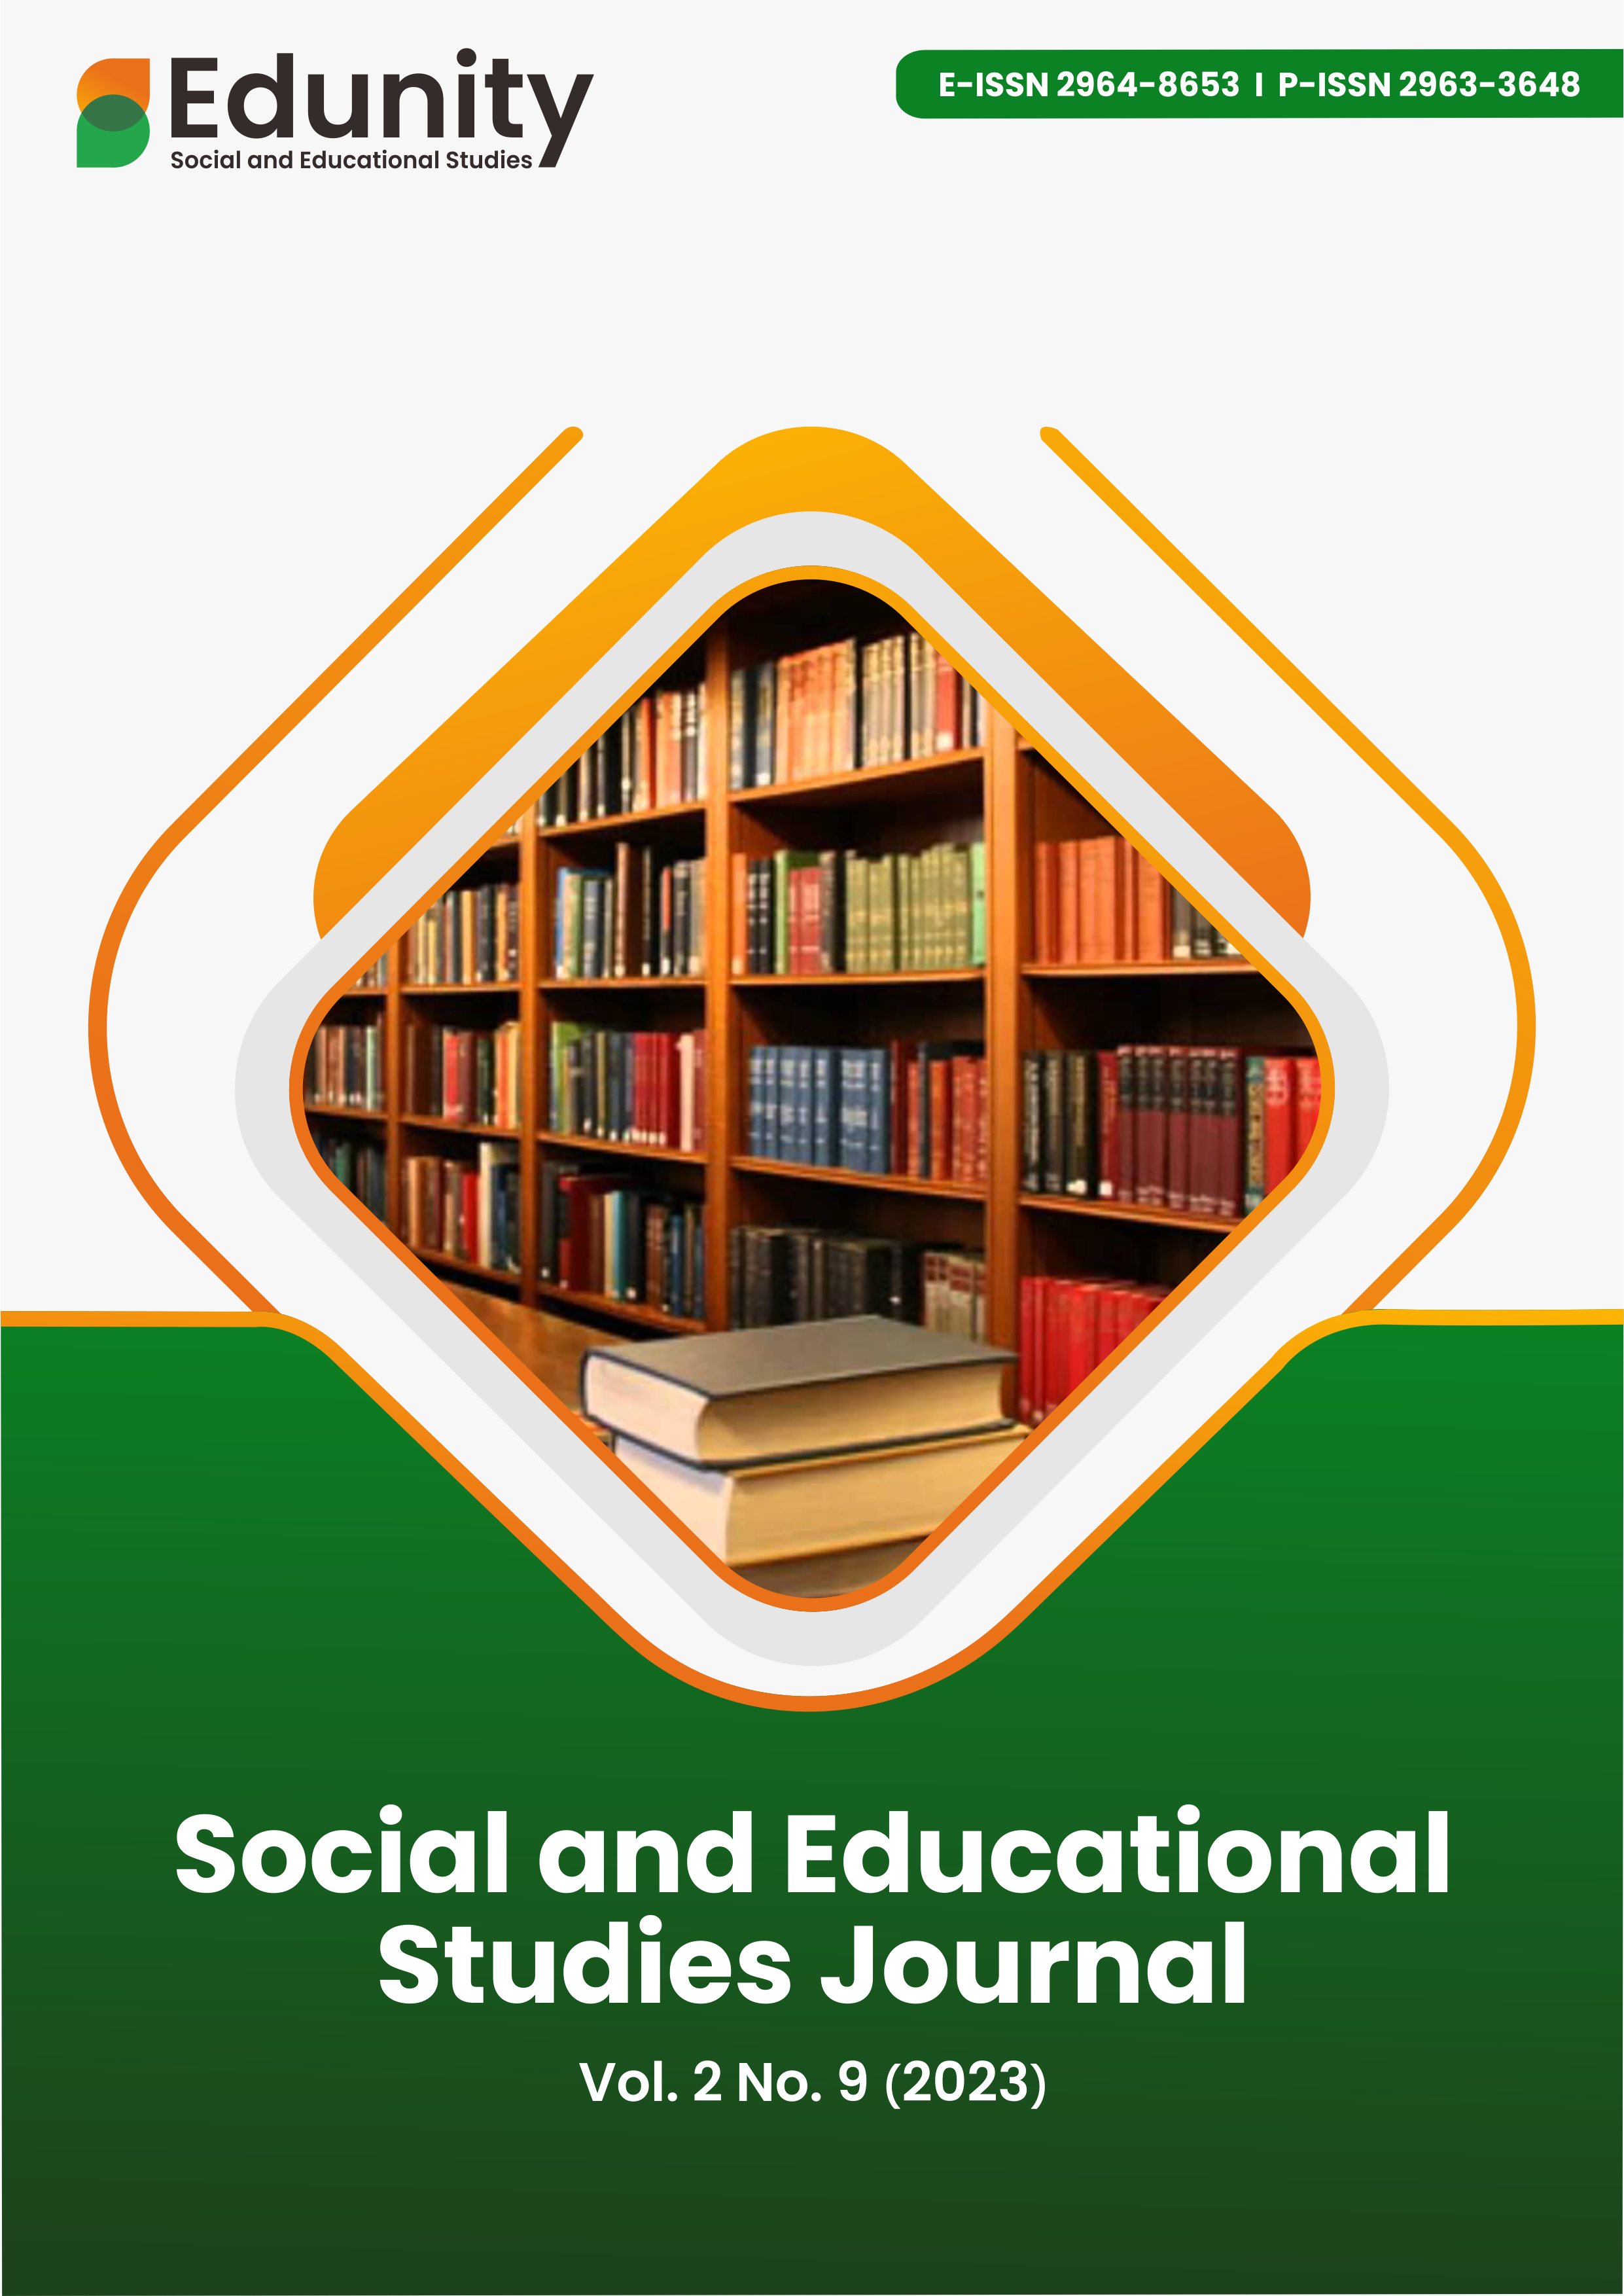 					View Vol. 2 No. 9 (2023): Edunity : Social and Educational Studies
				